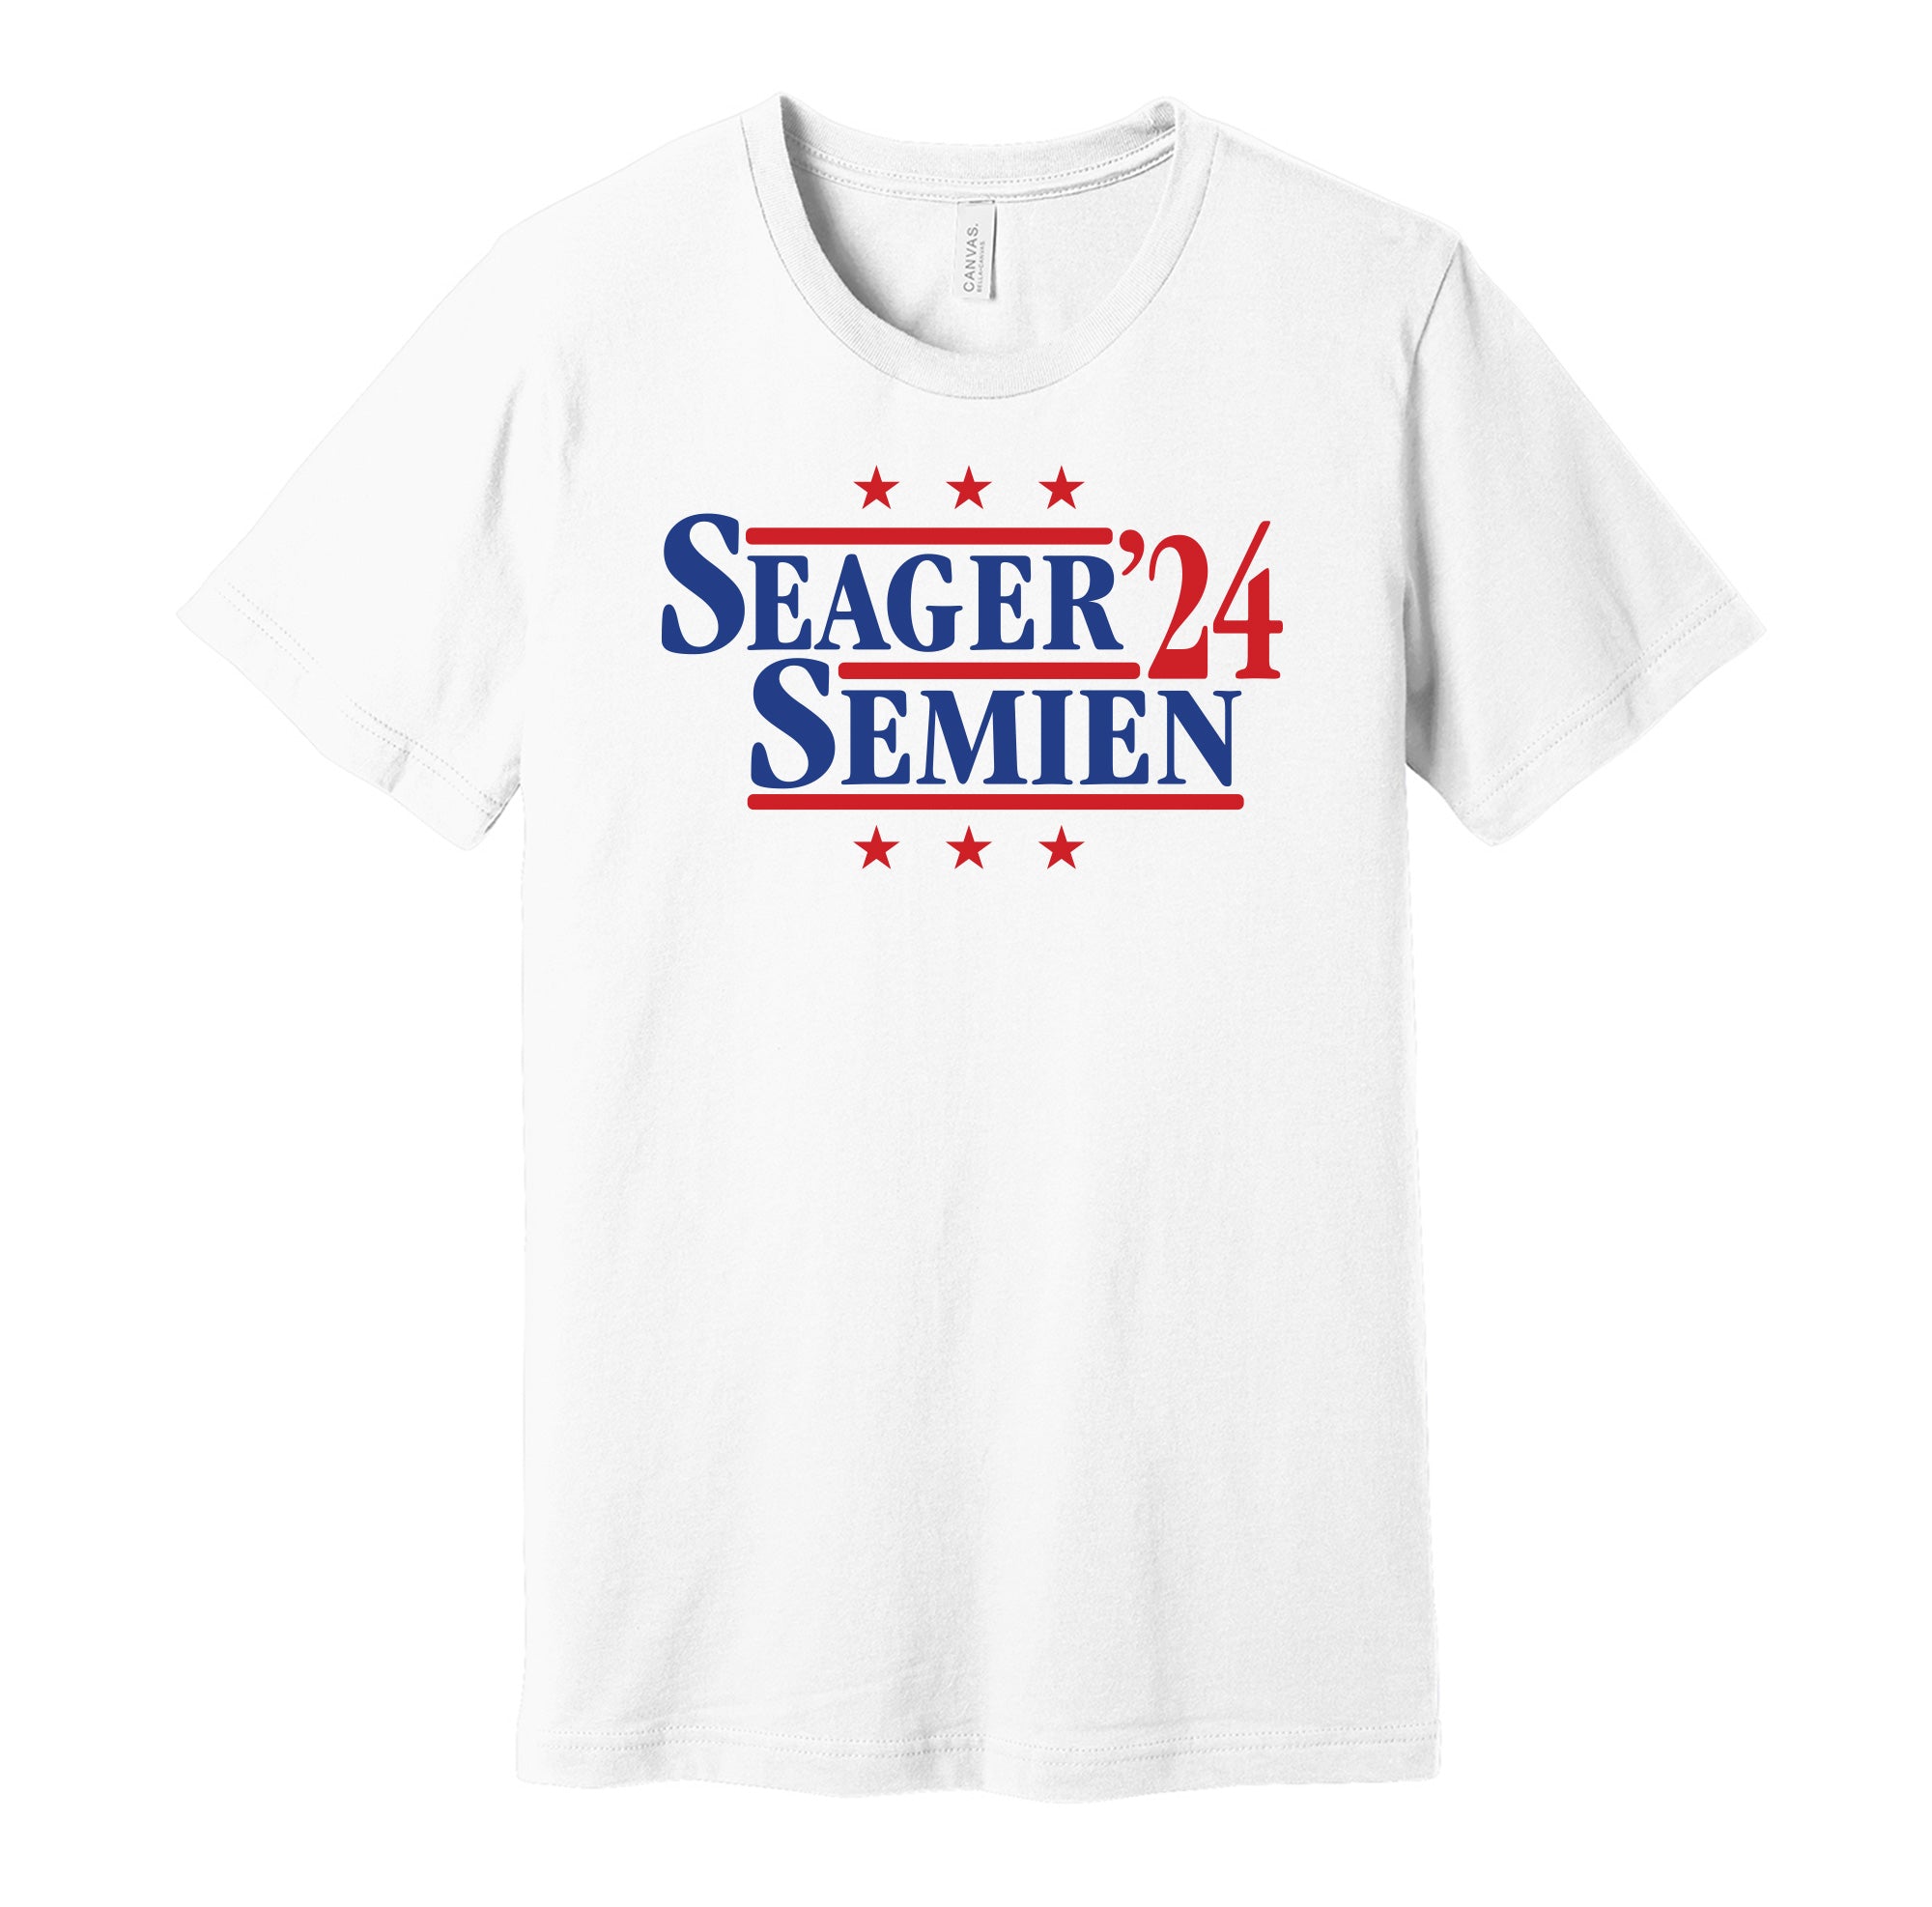 breakingt Corey Seager & Marcus Semien '24 - Texas Baseball T-Shirt